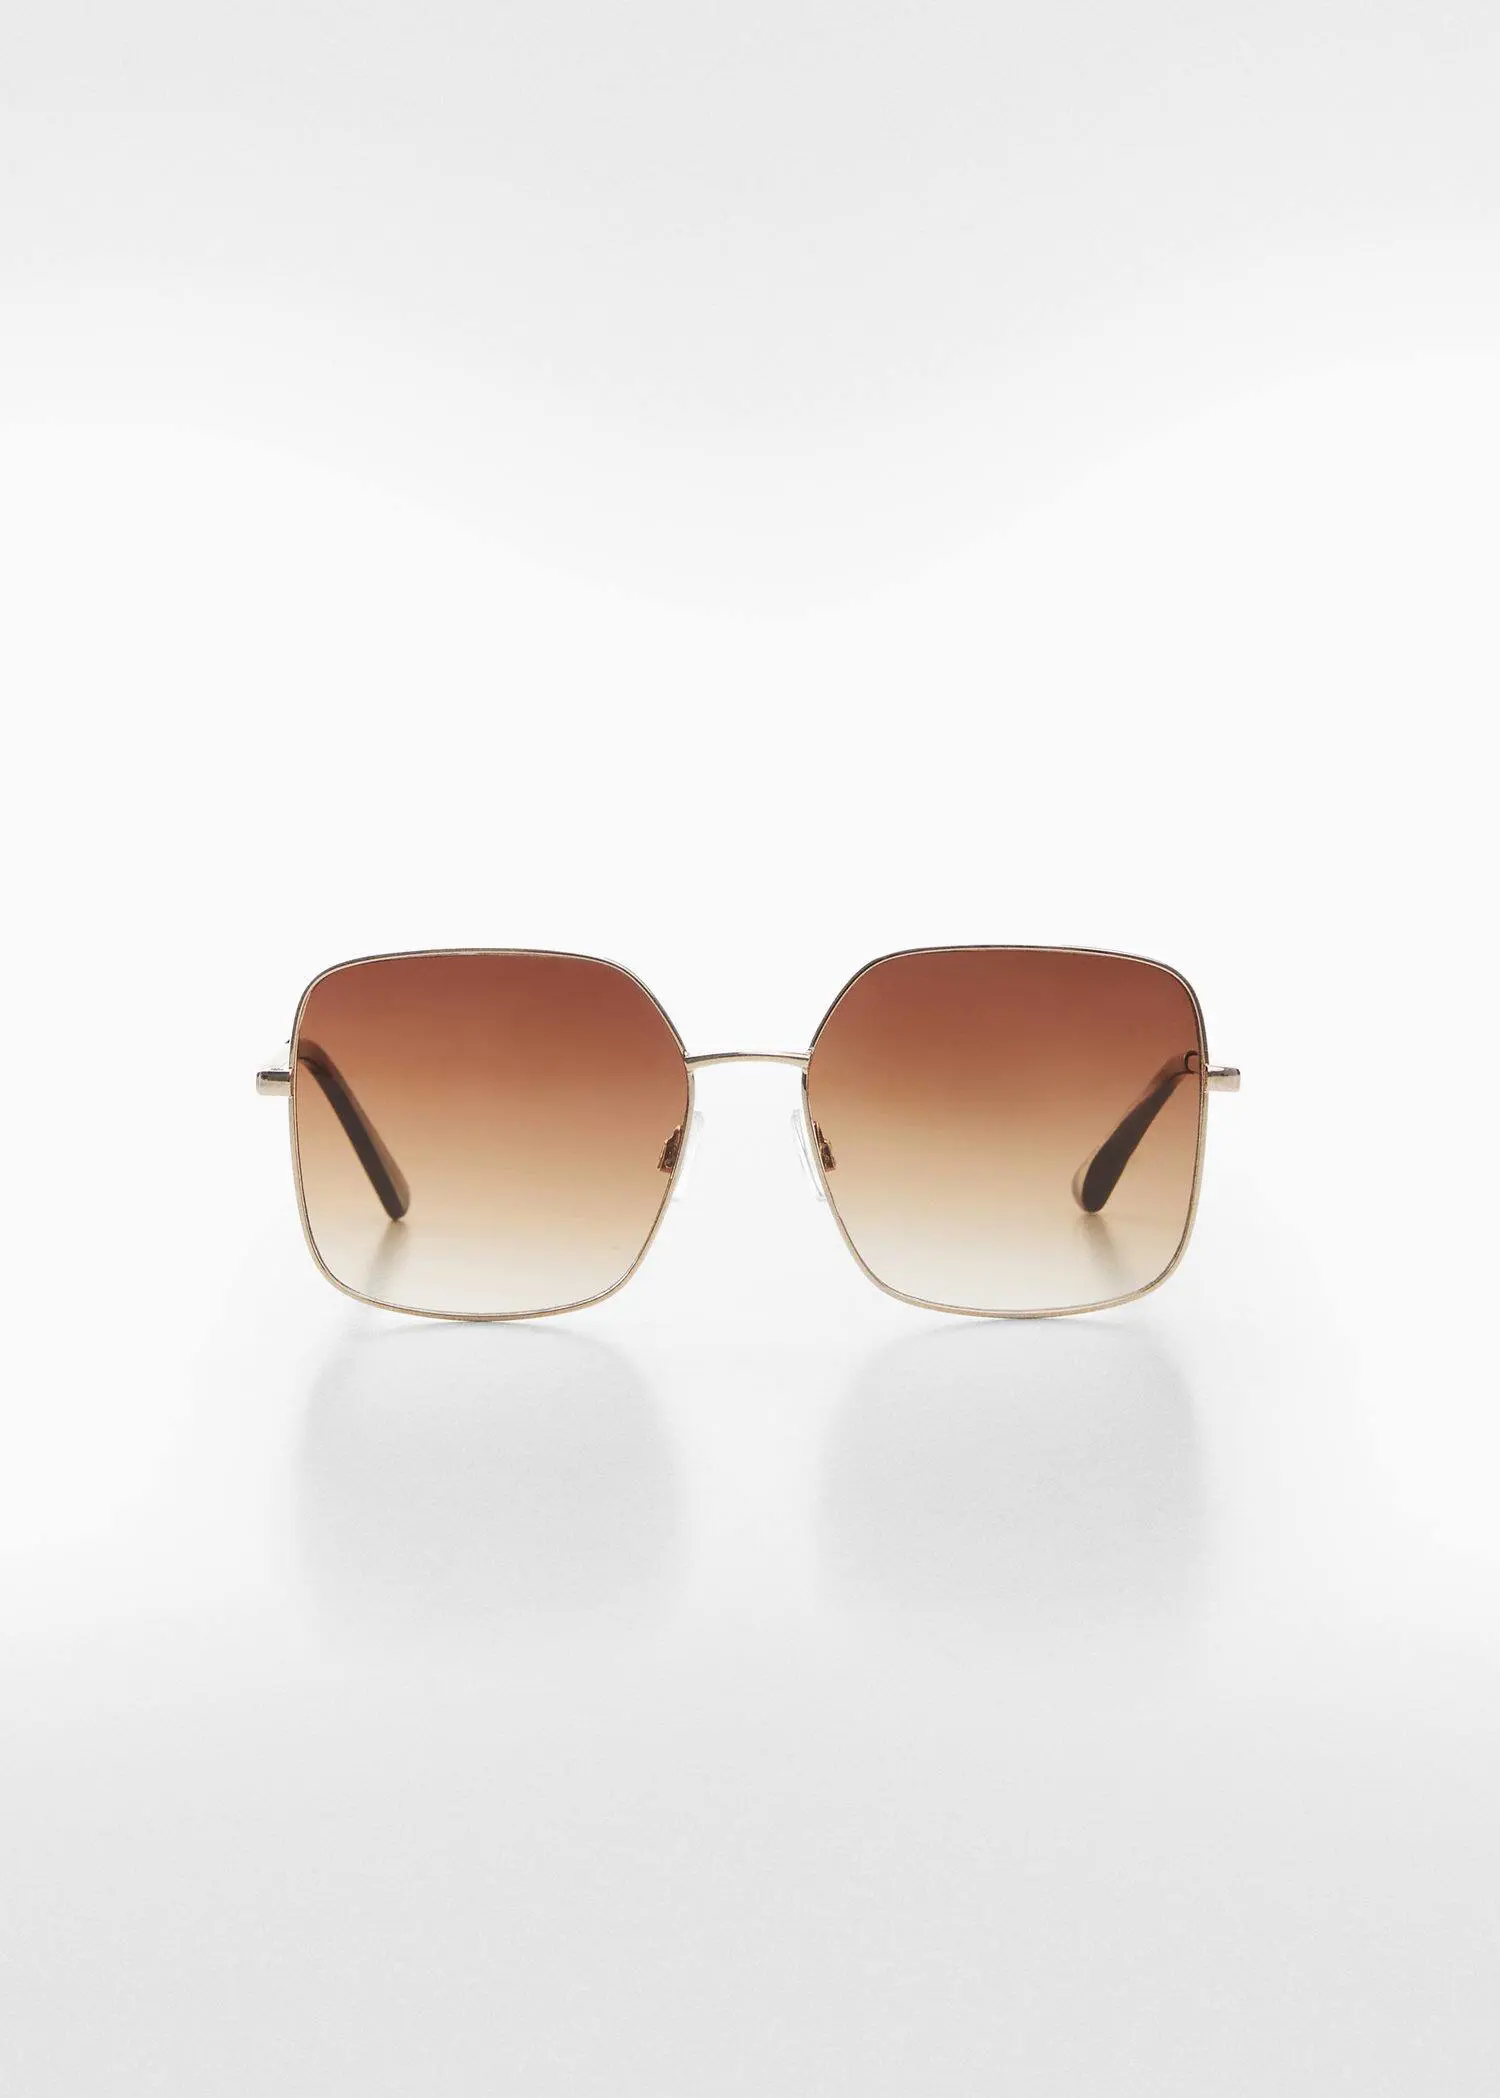 Mango Square metallic frame sunglasses. 1